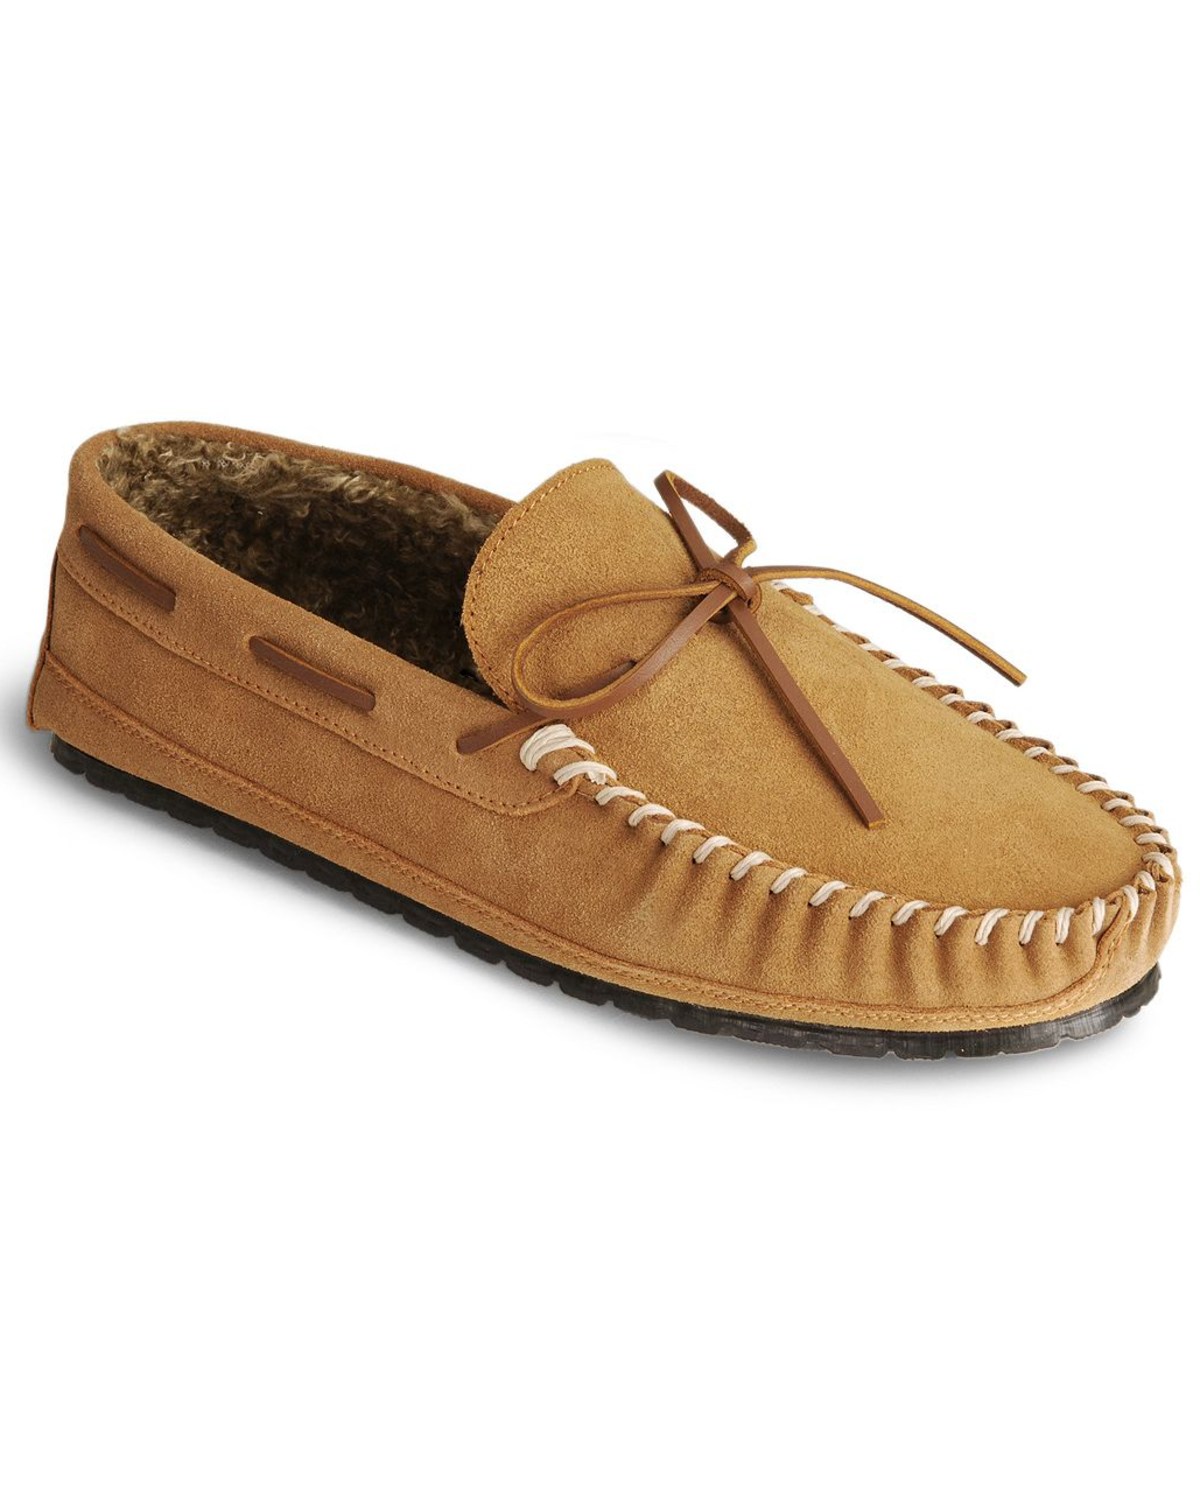 minnetonka sandals official site